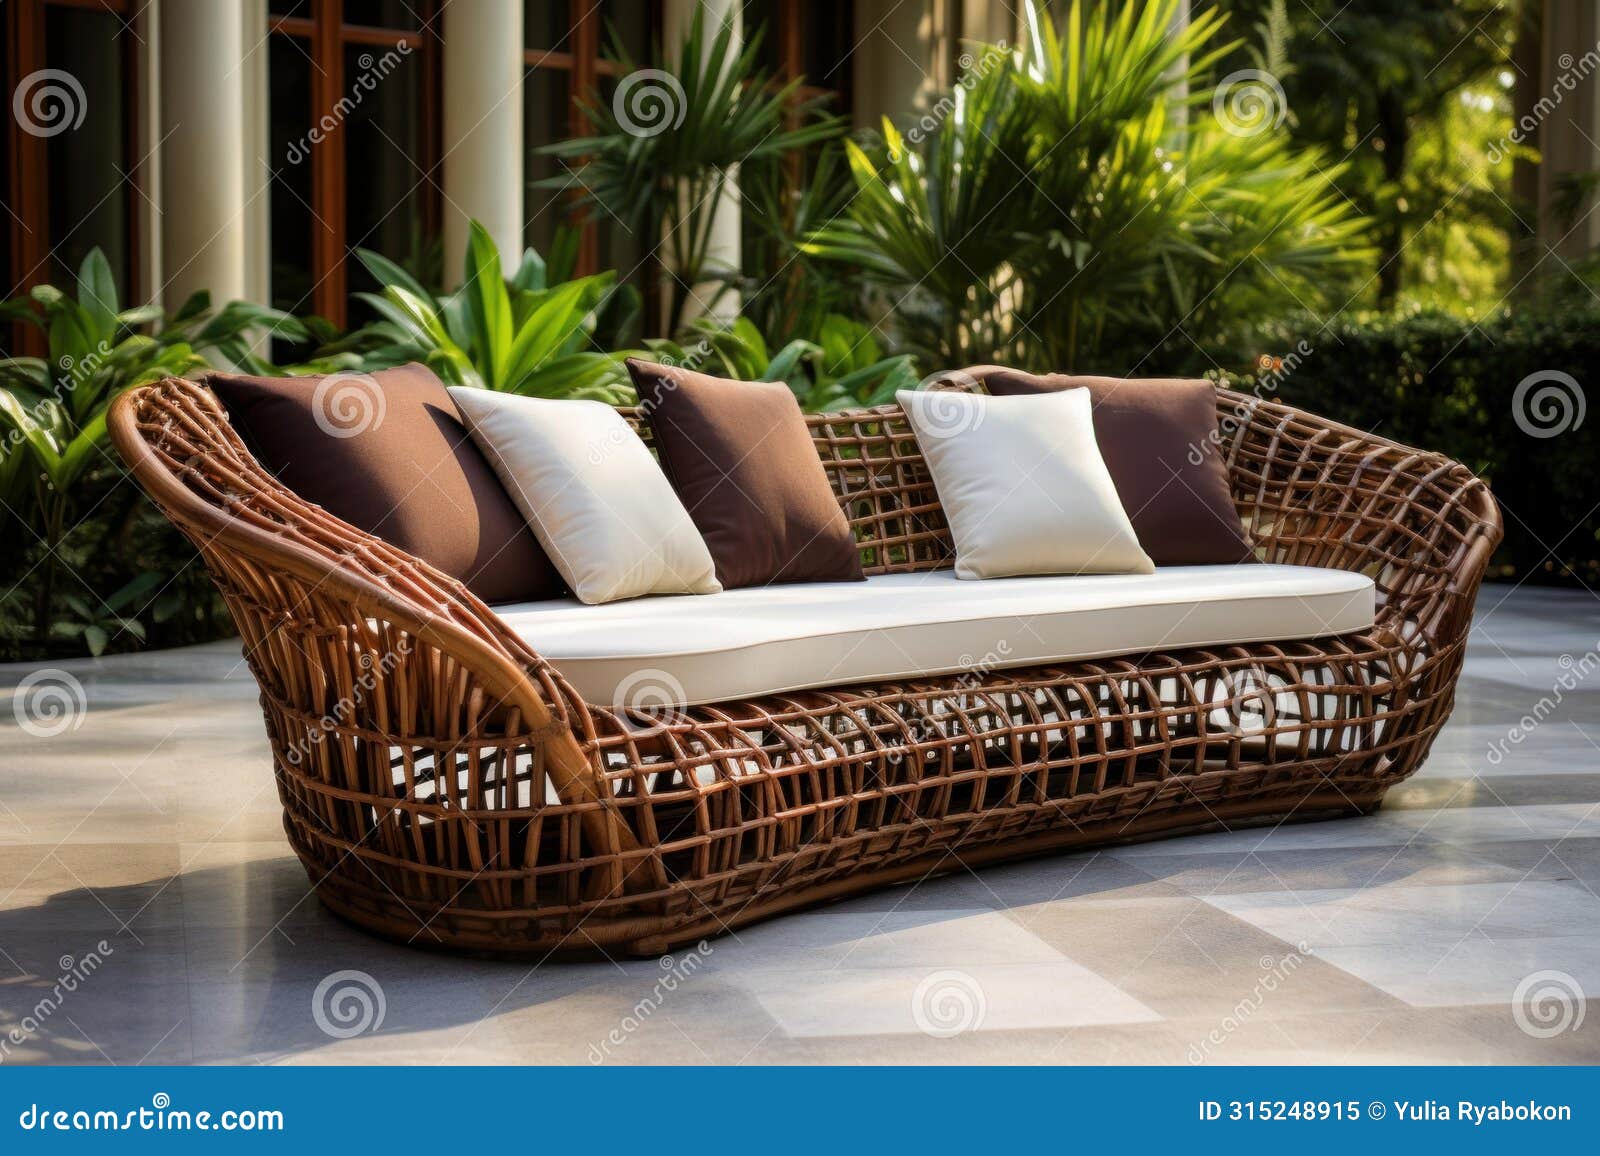 versatile outdoor rattan chairs sofa. generate ai